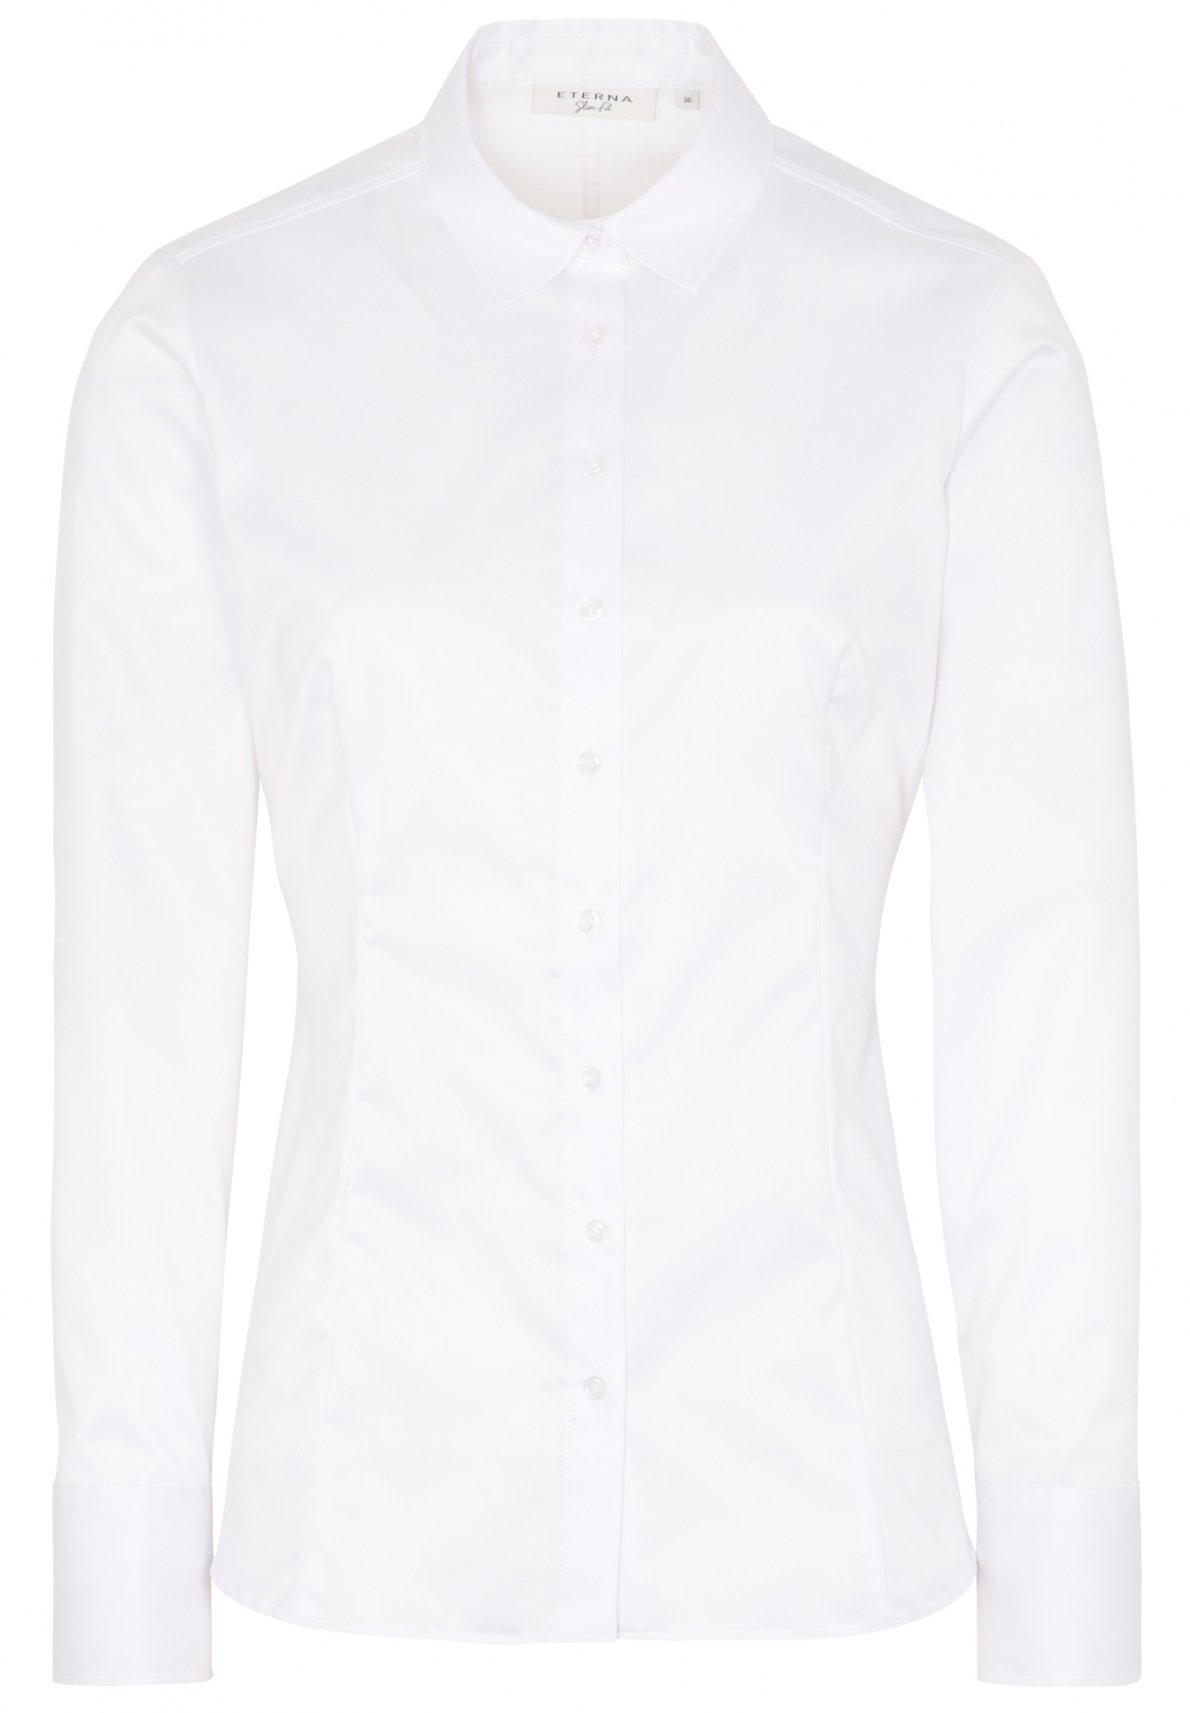 ETERNA SLIM FIT COVER SHIRT Langarm Bluse weiß 5008-00-D10Y | Slim Fit |  Eterna | Blusen | Damen Bekleidung | Jeans-Manufaktur